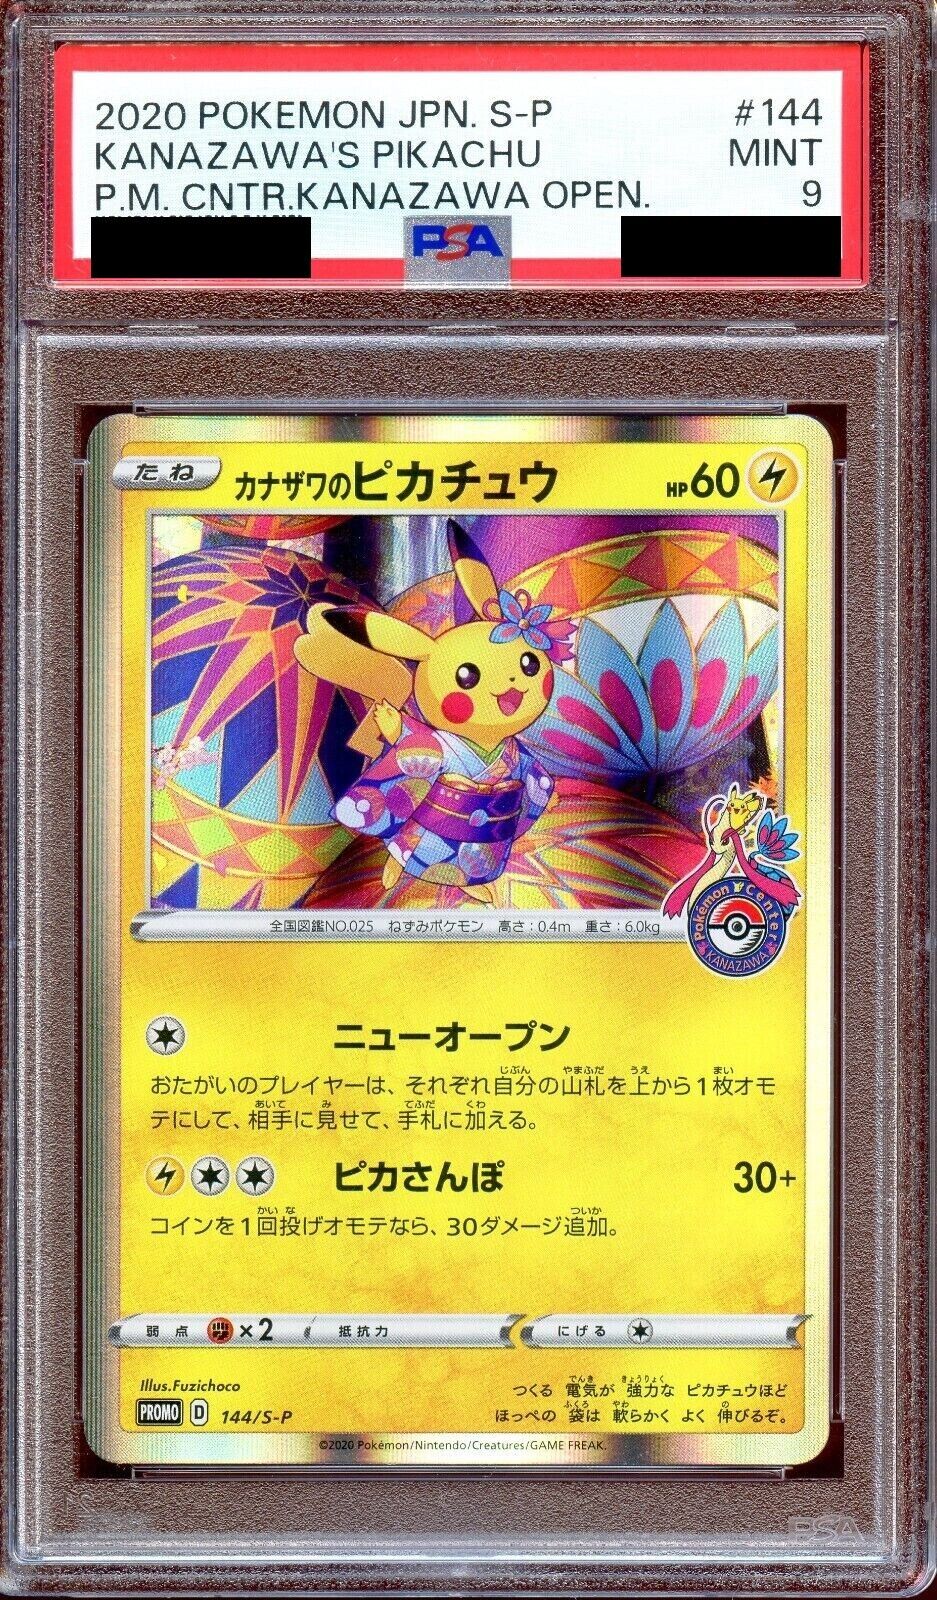 PSA 9 Kanazawa's Pikachu 144/S-P Center Promo Japanese Pokemon Card MINT